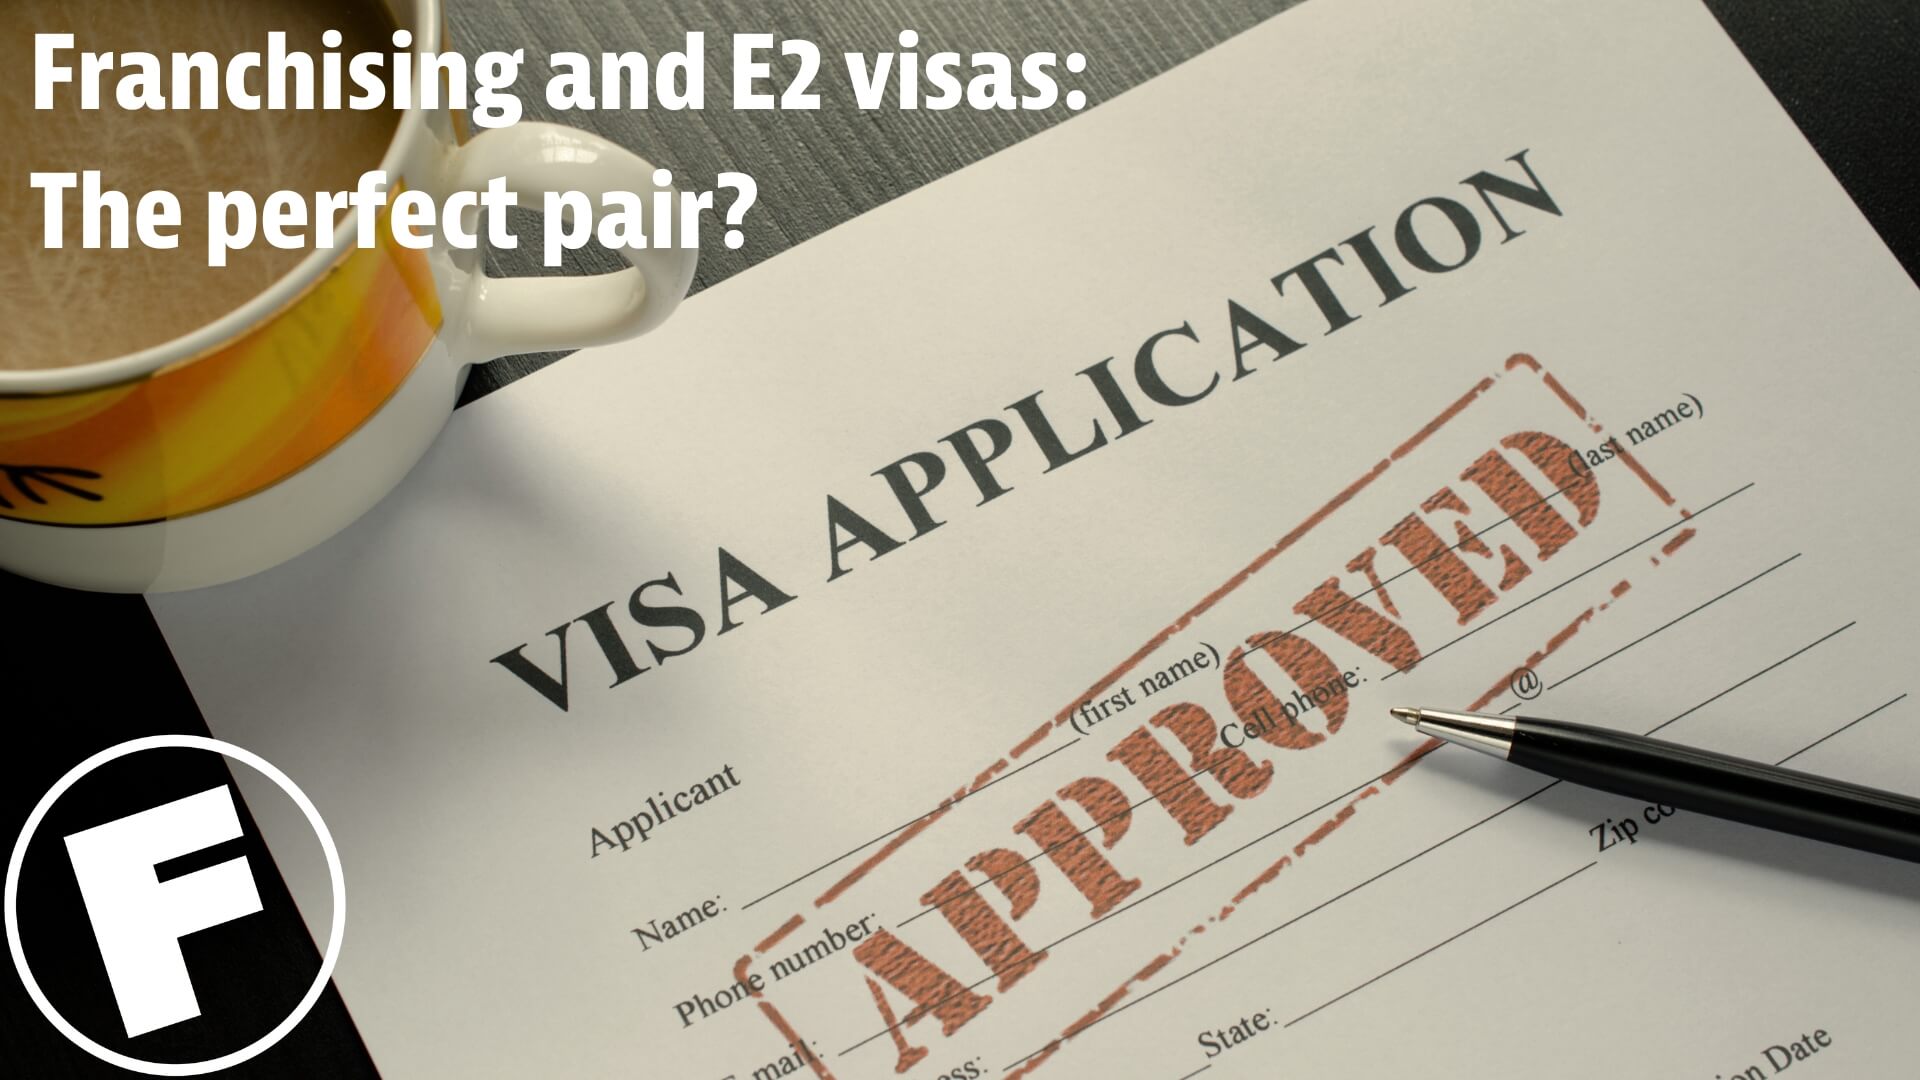 franchising and e2 visas--the pefect pair?